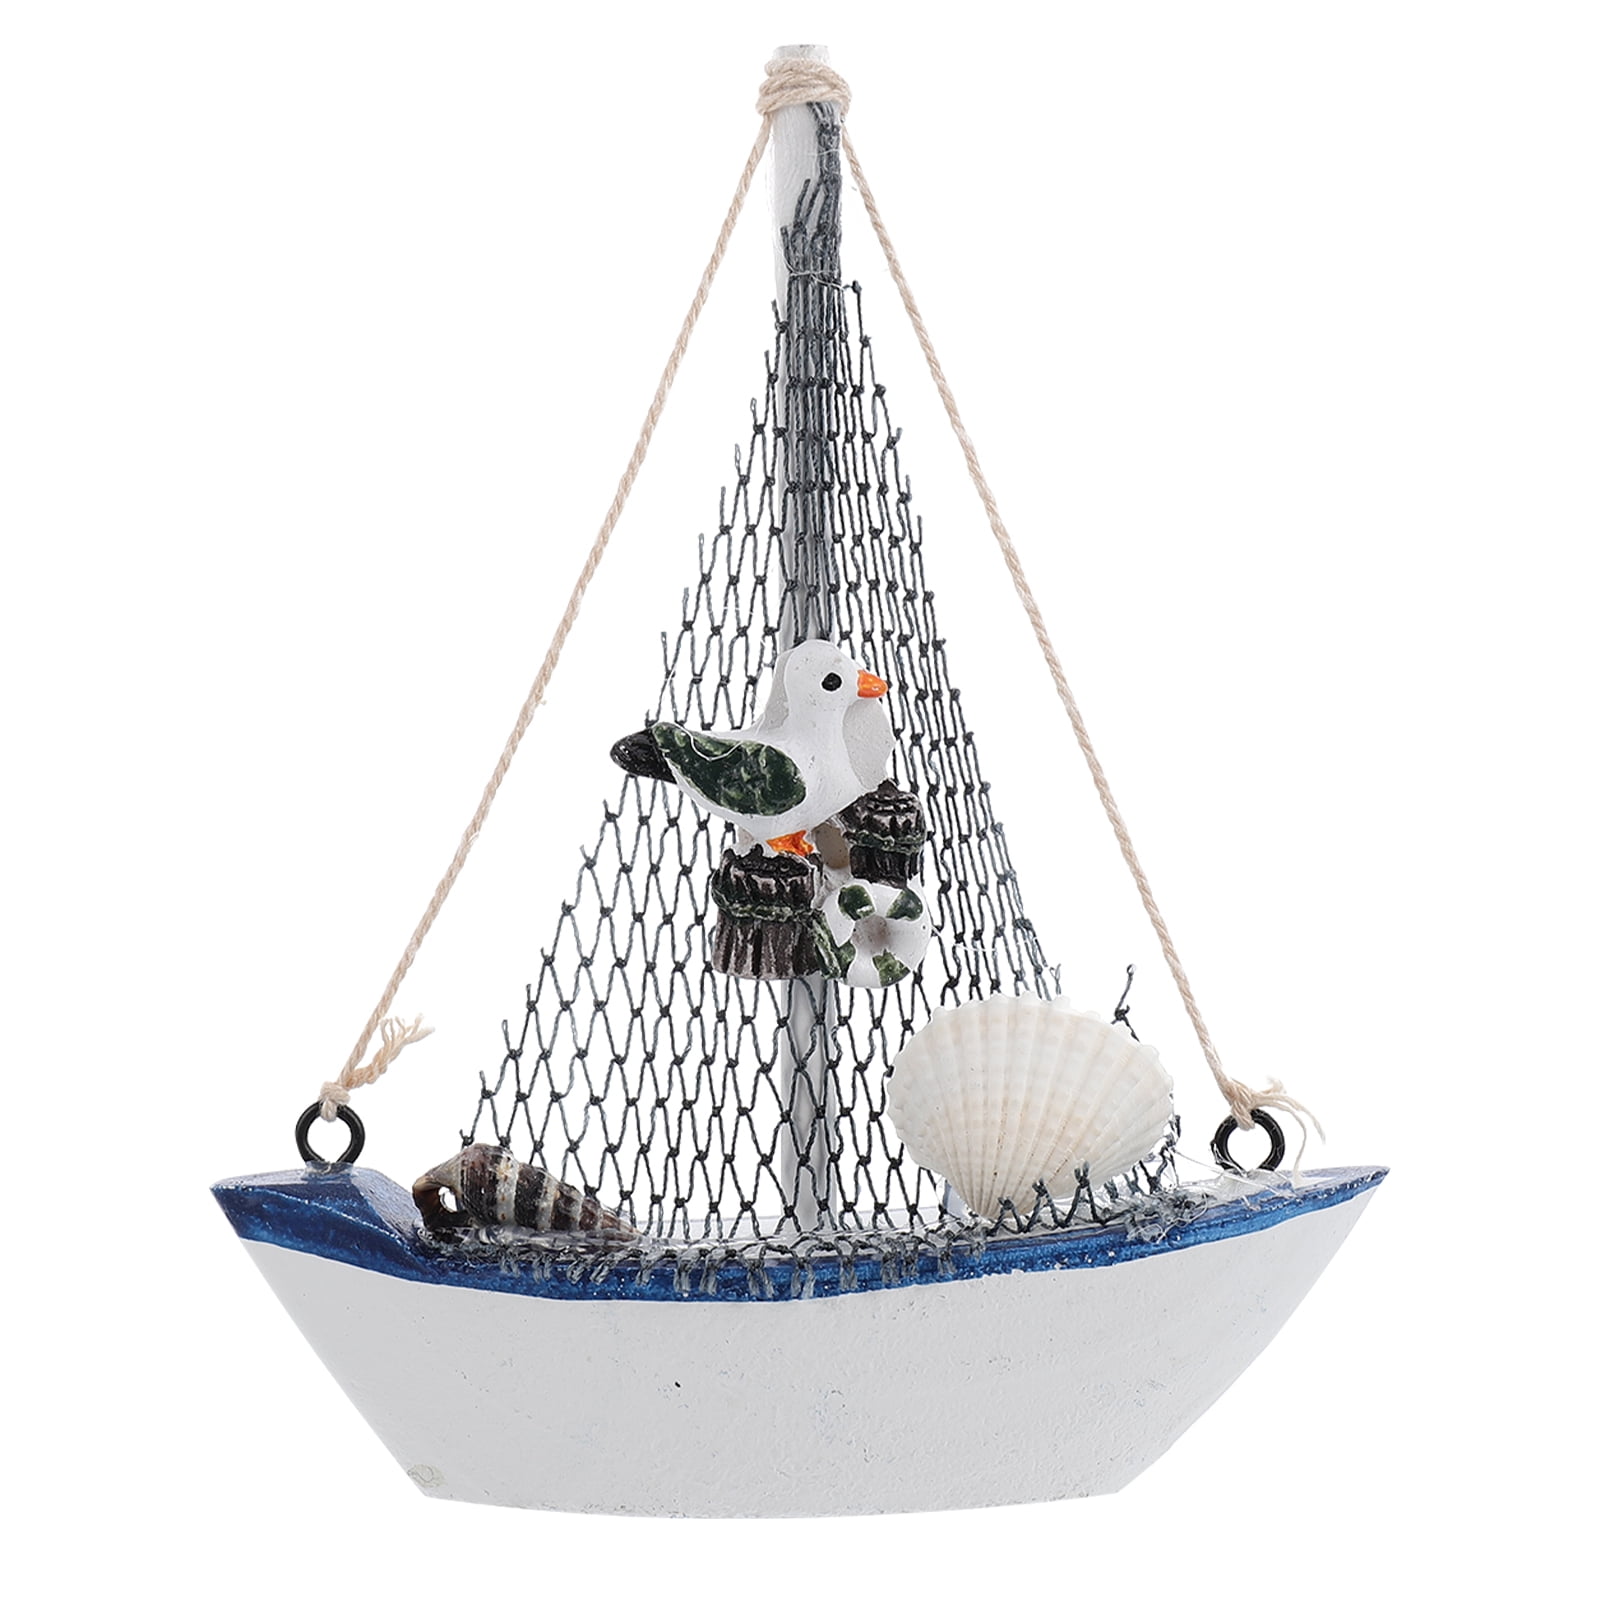 1Pc Wooden Sailboat Crafts Ship Model Sailing Boat Decor Home Ornament 